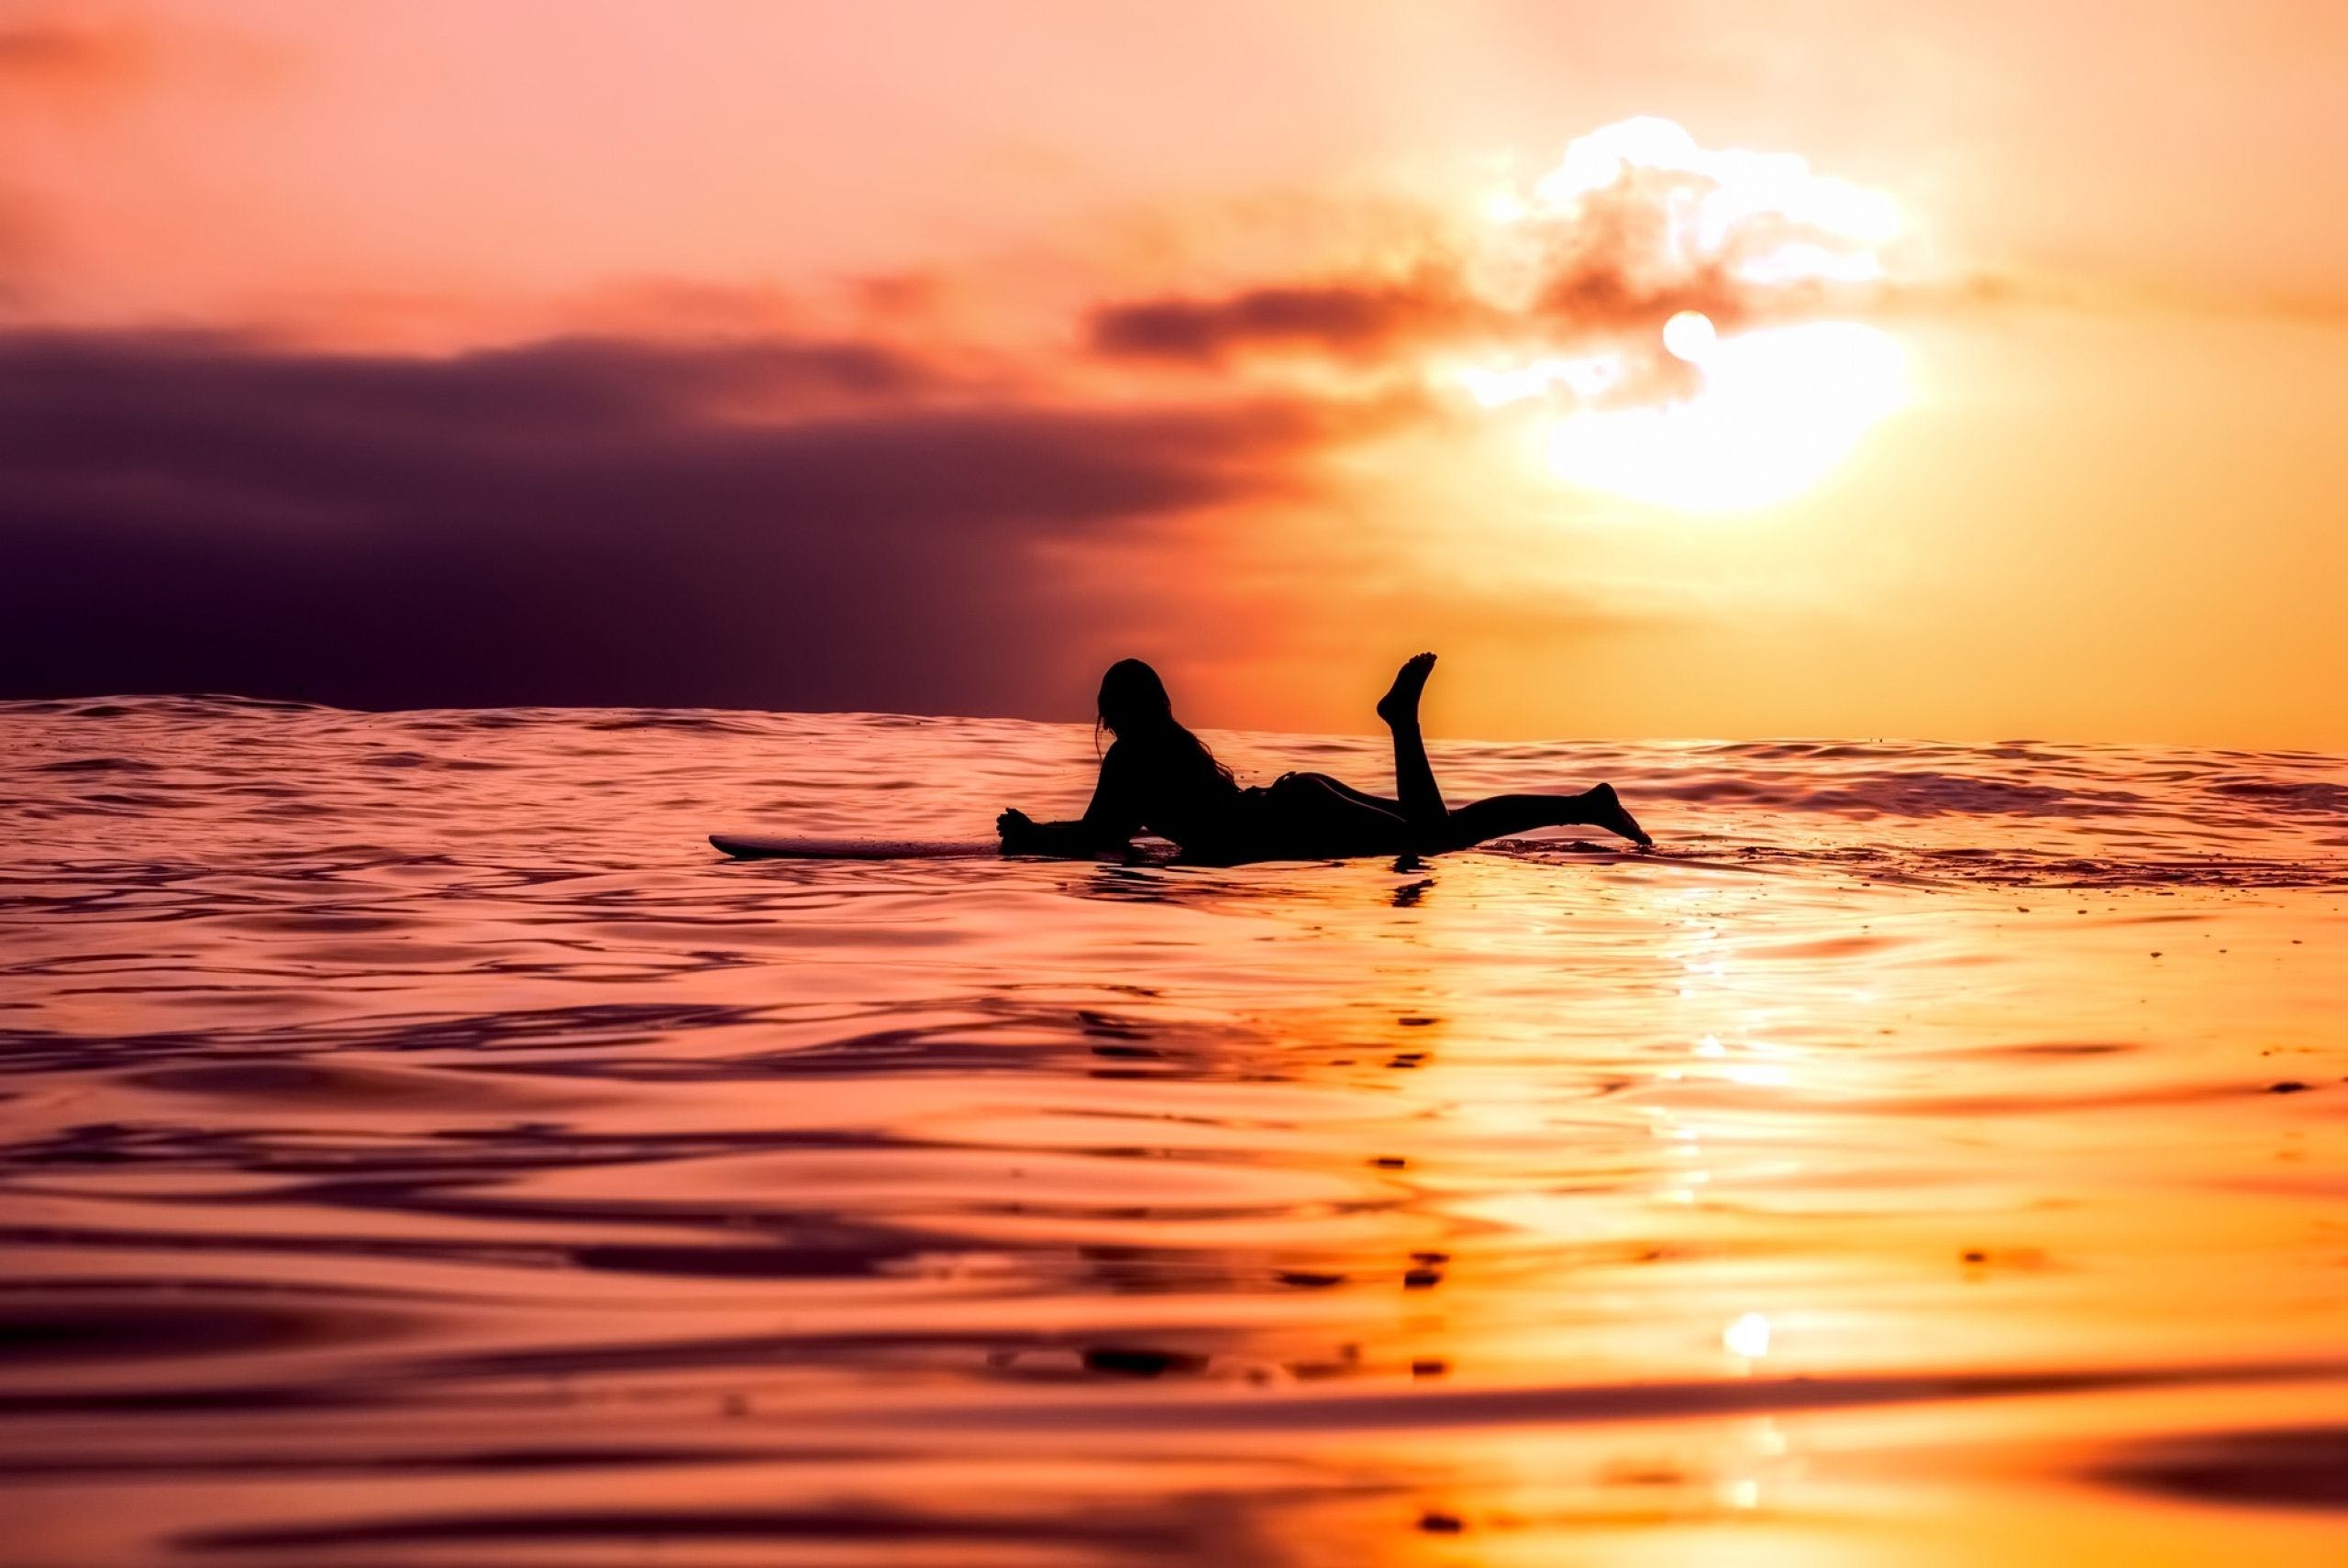 HD Surfing Woman Silhouette Sunset Wallpaper